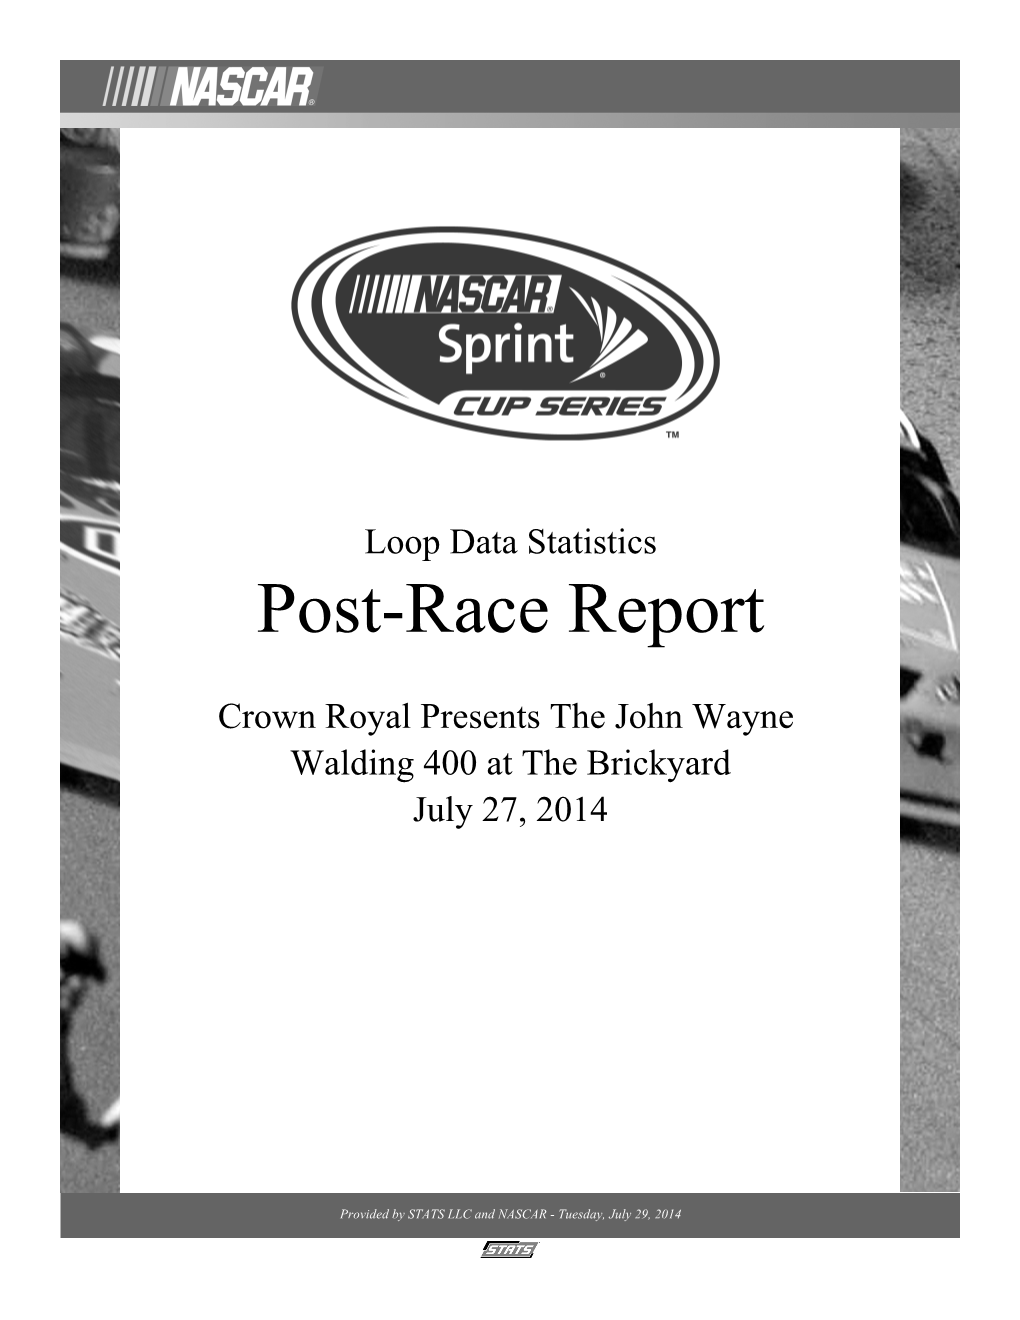 Post-Race Report